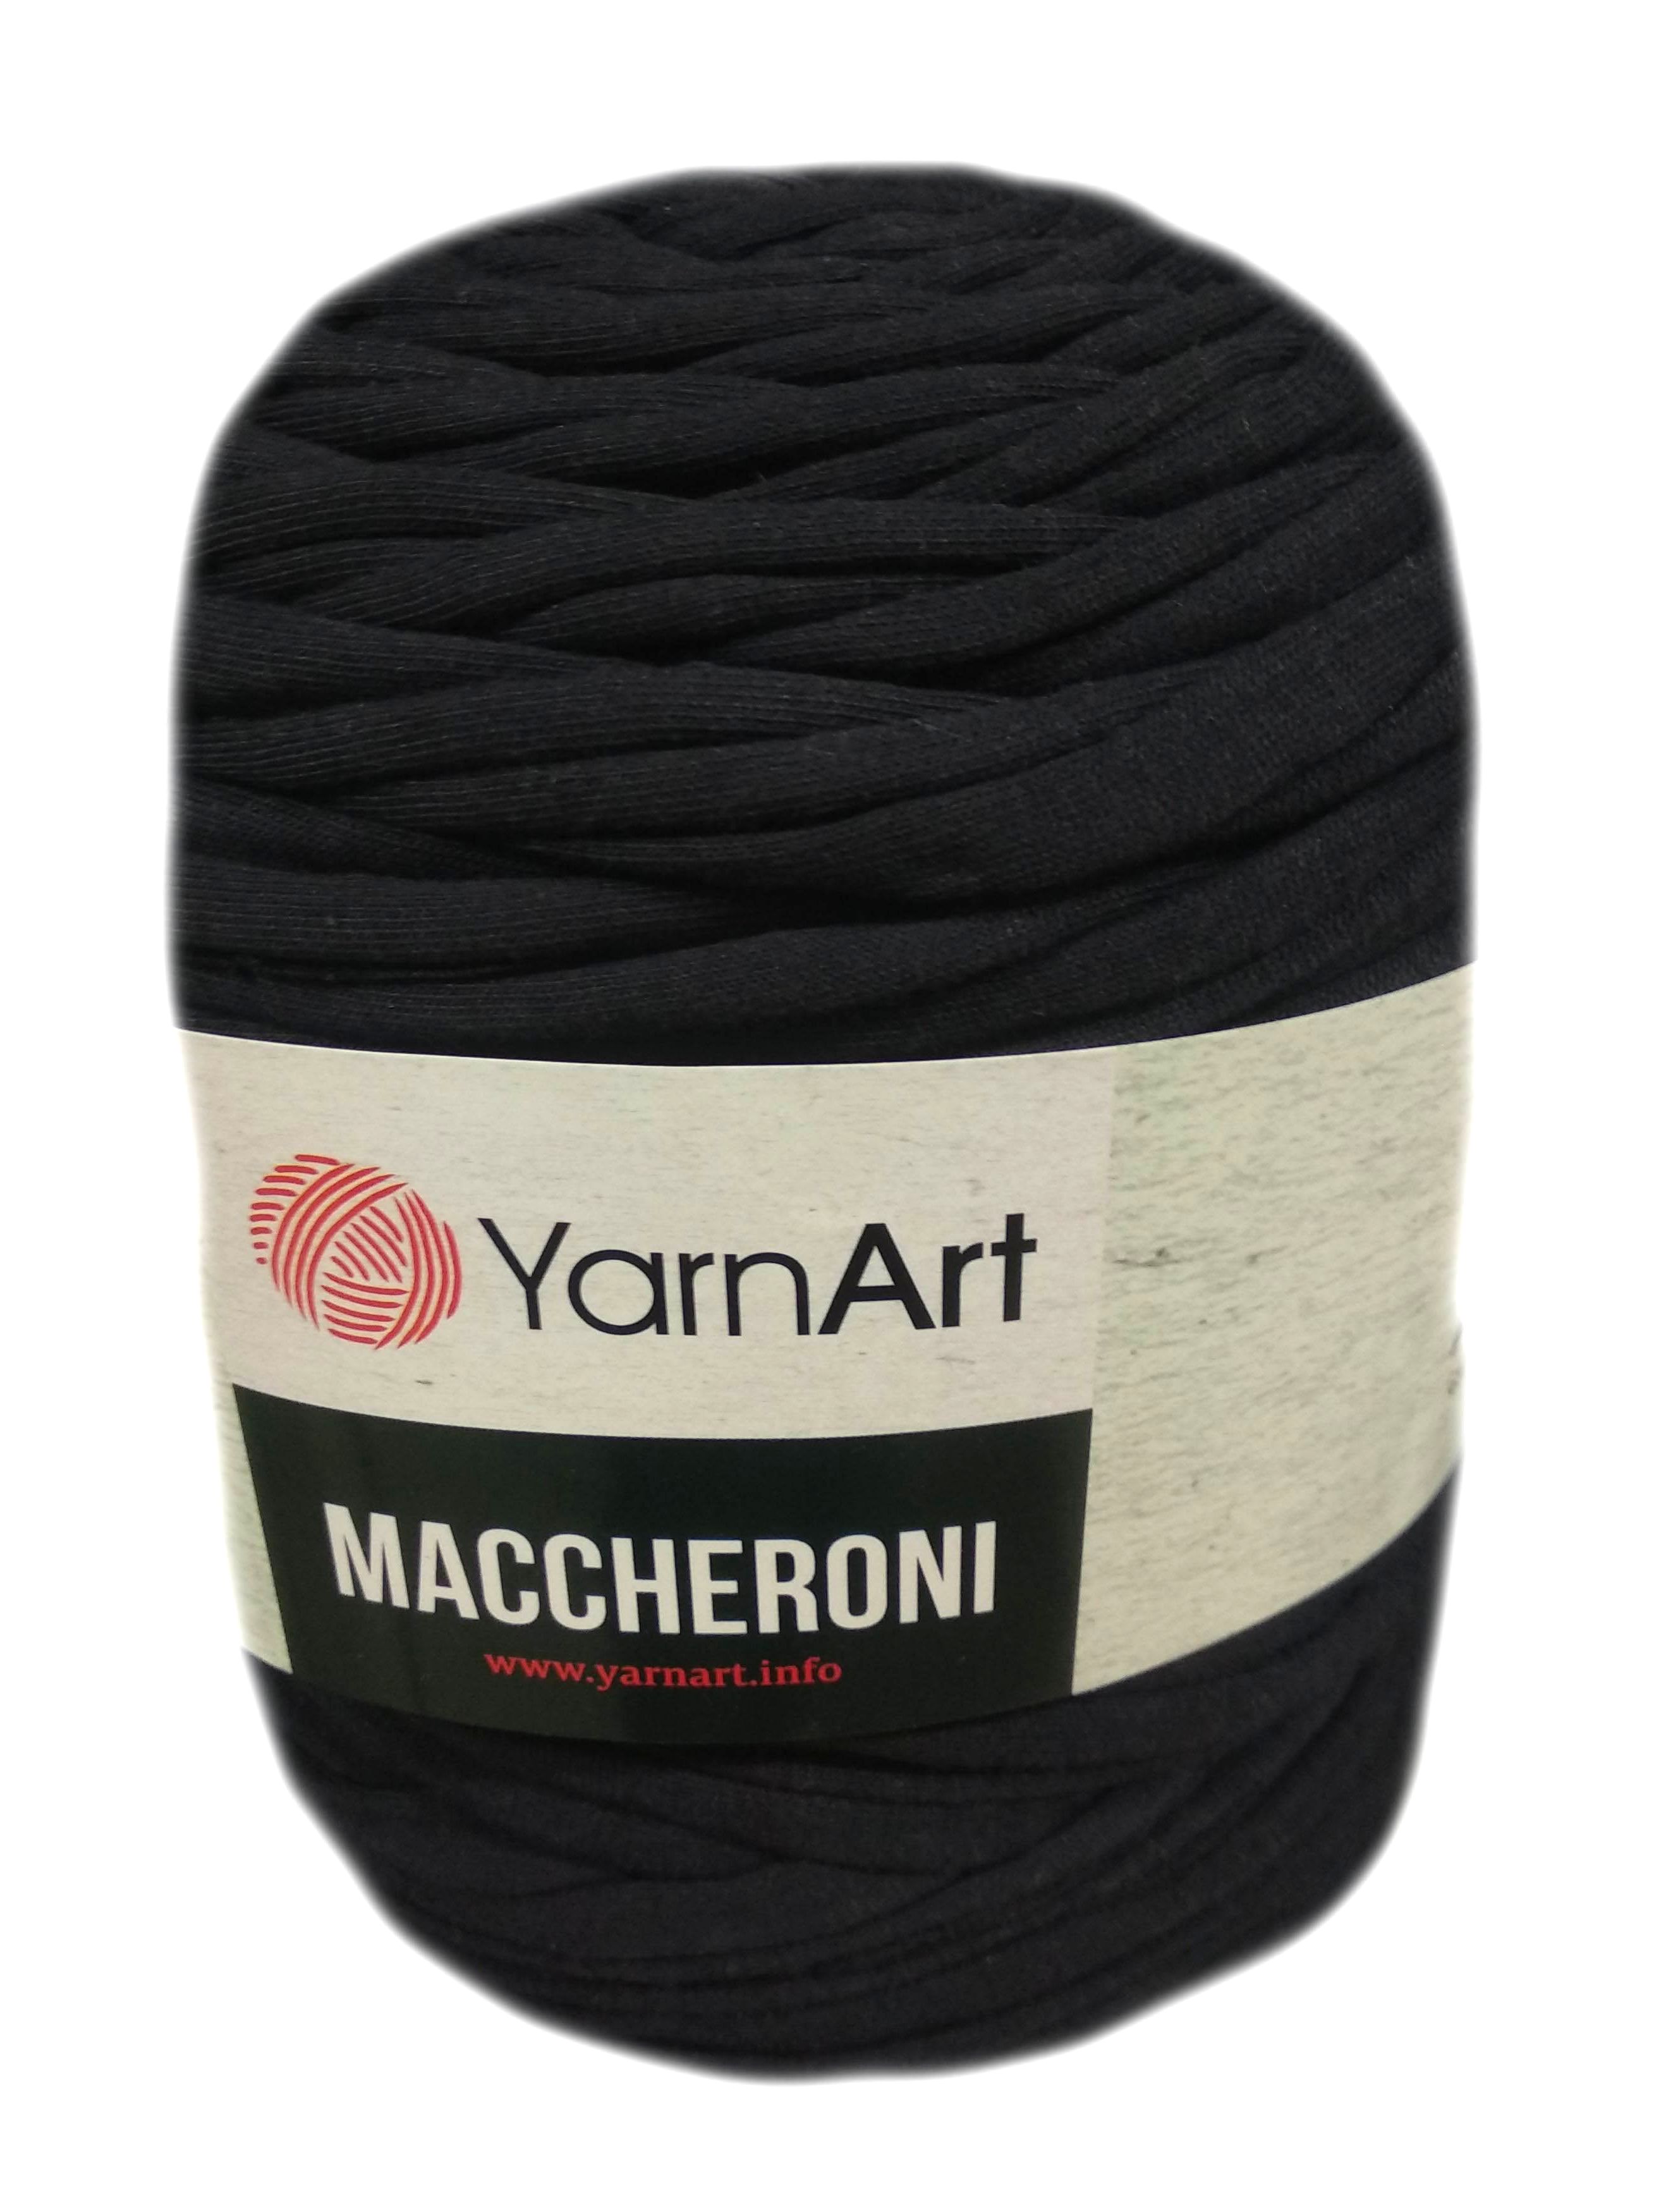 YarnArt MACCHERONI fekete póló fonal. Tű 12-15 mm.